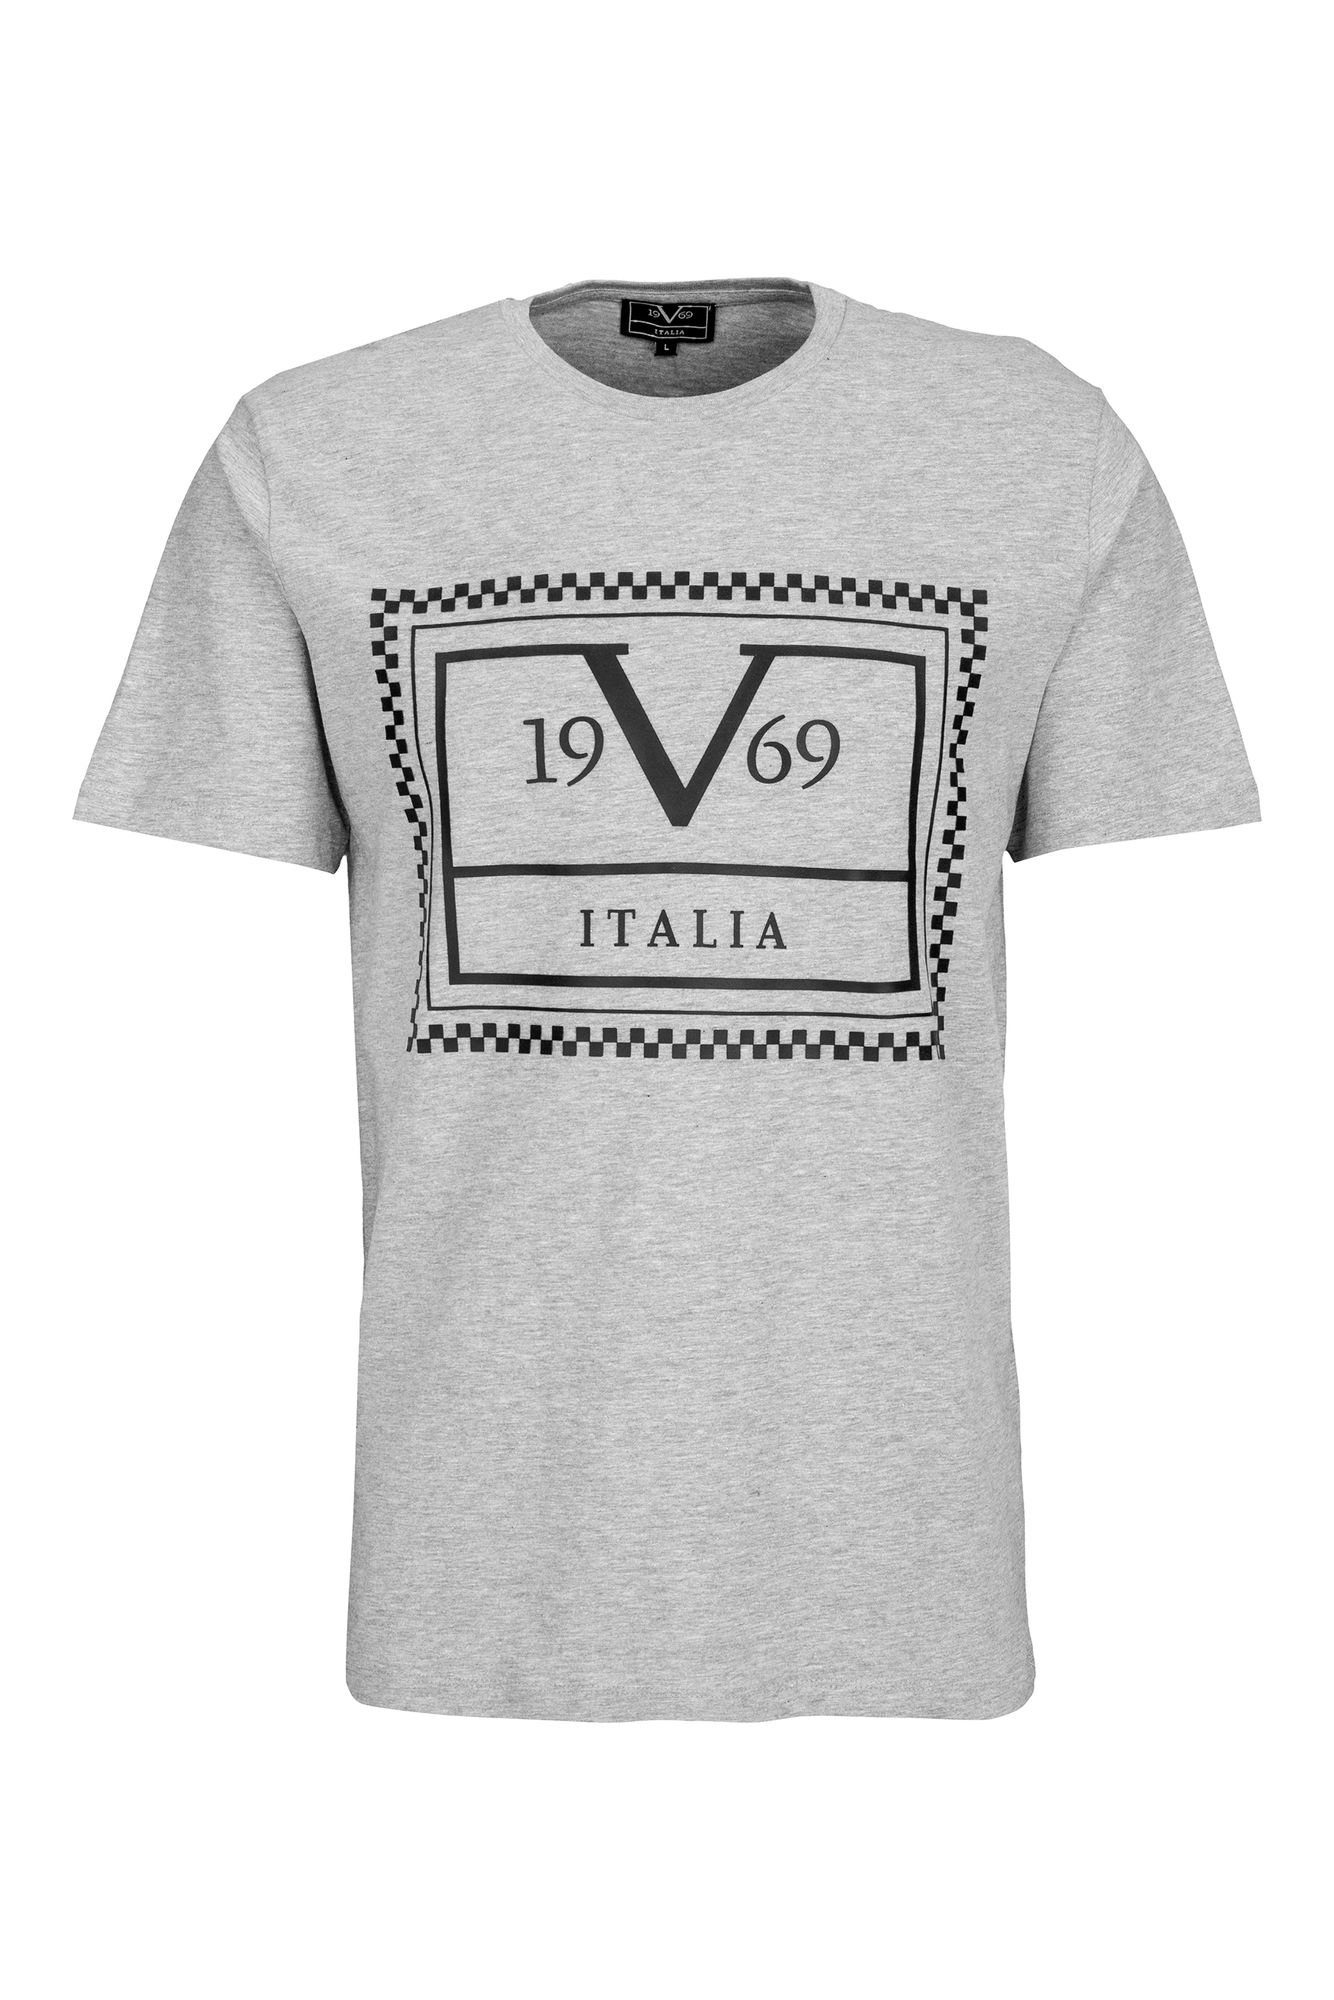 19V69 Italia by Versace T-Shirt Giovanni